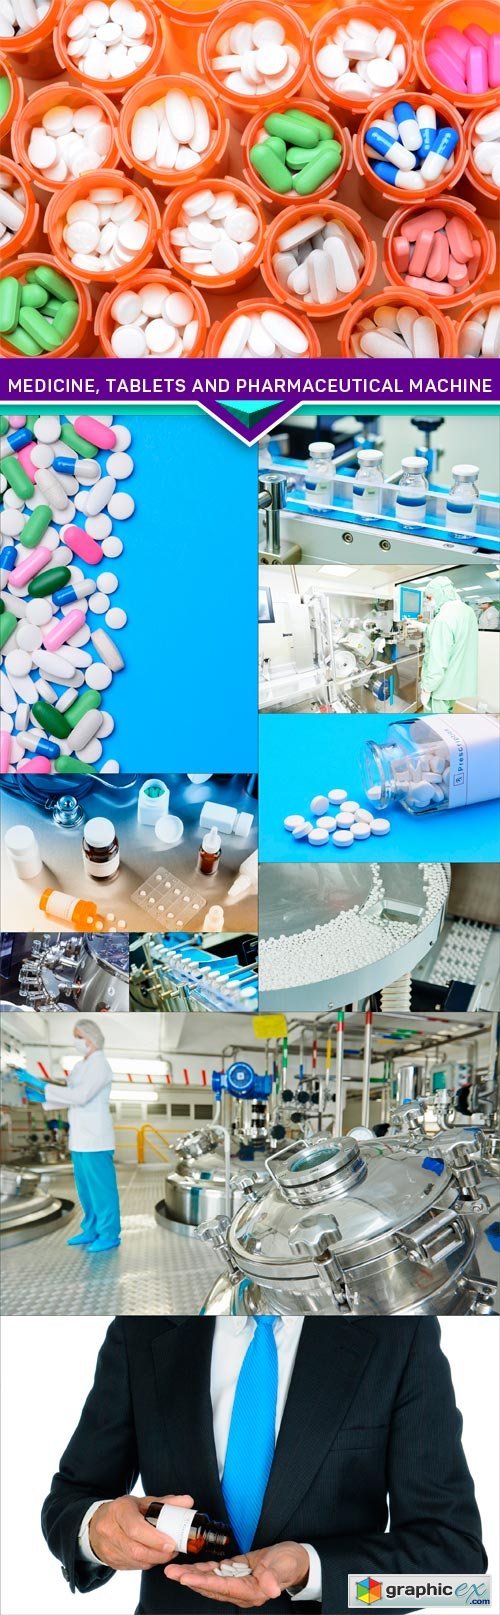 Medicine, tablets and pharmaceutical machine 11X JPEG